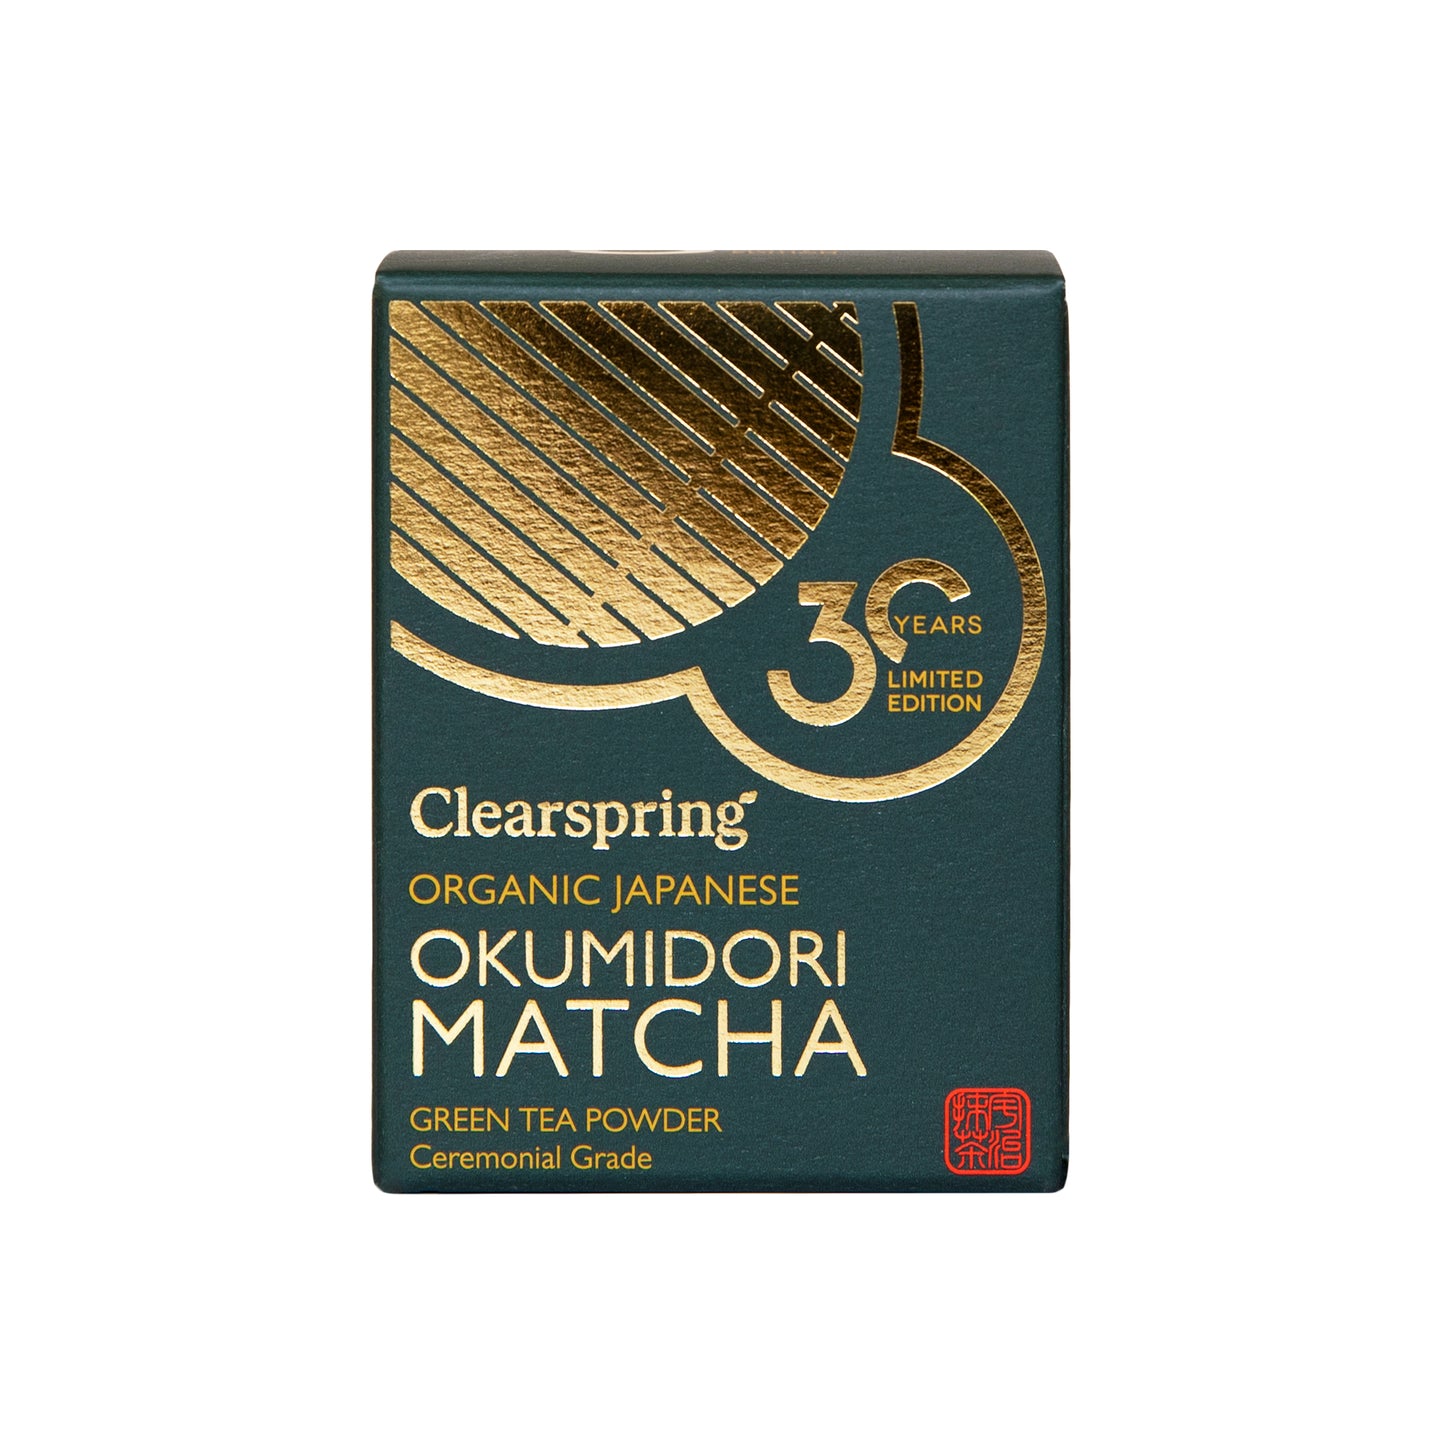 Limited Edition Organic Japanese Okumidori Matcha - Ceremonial Grade